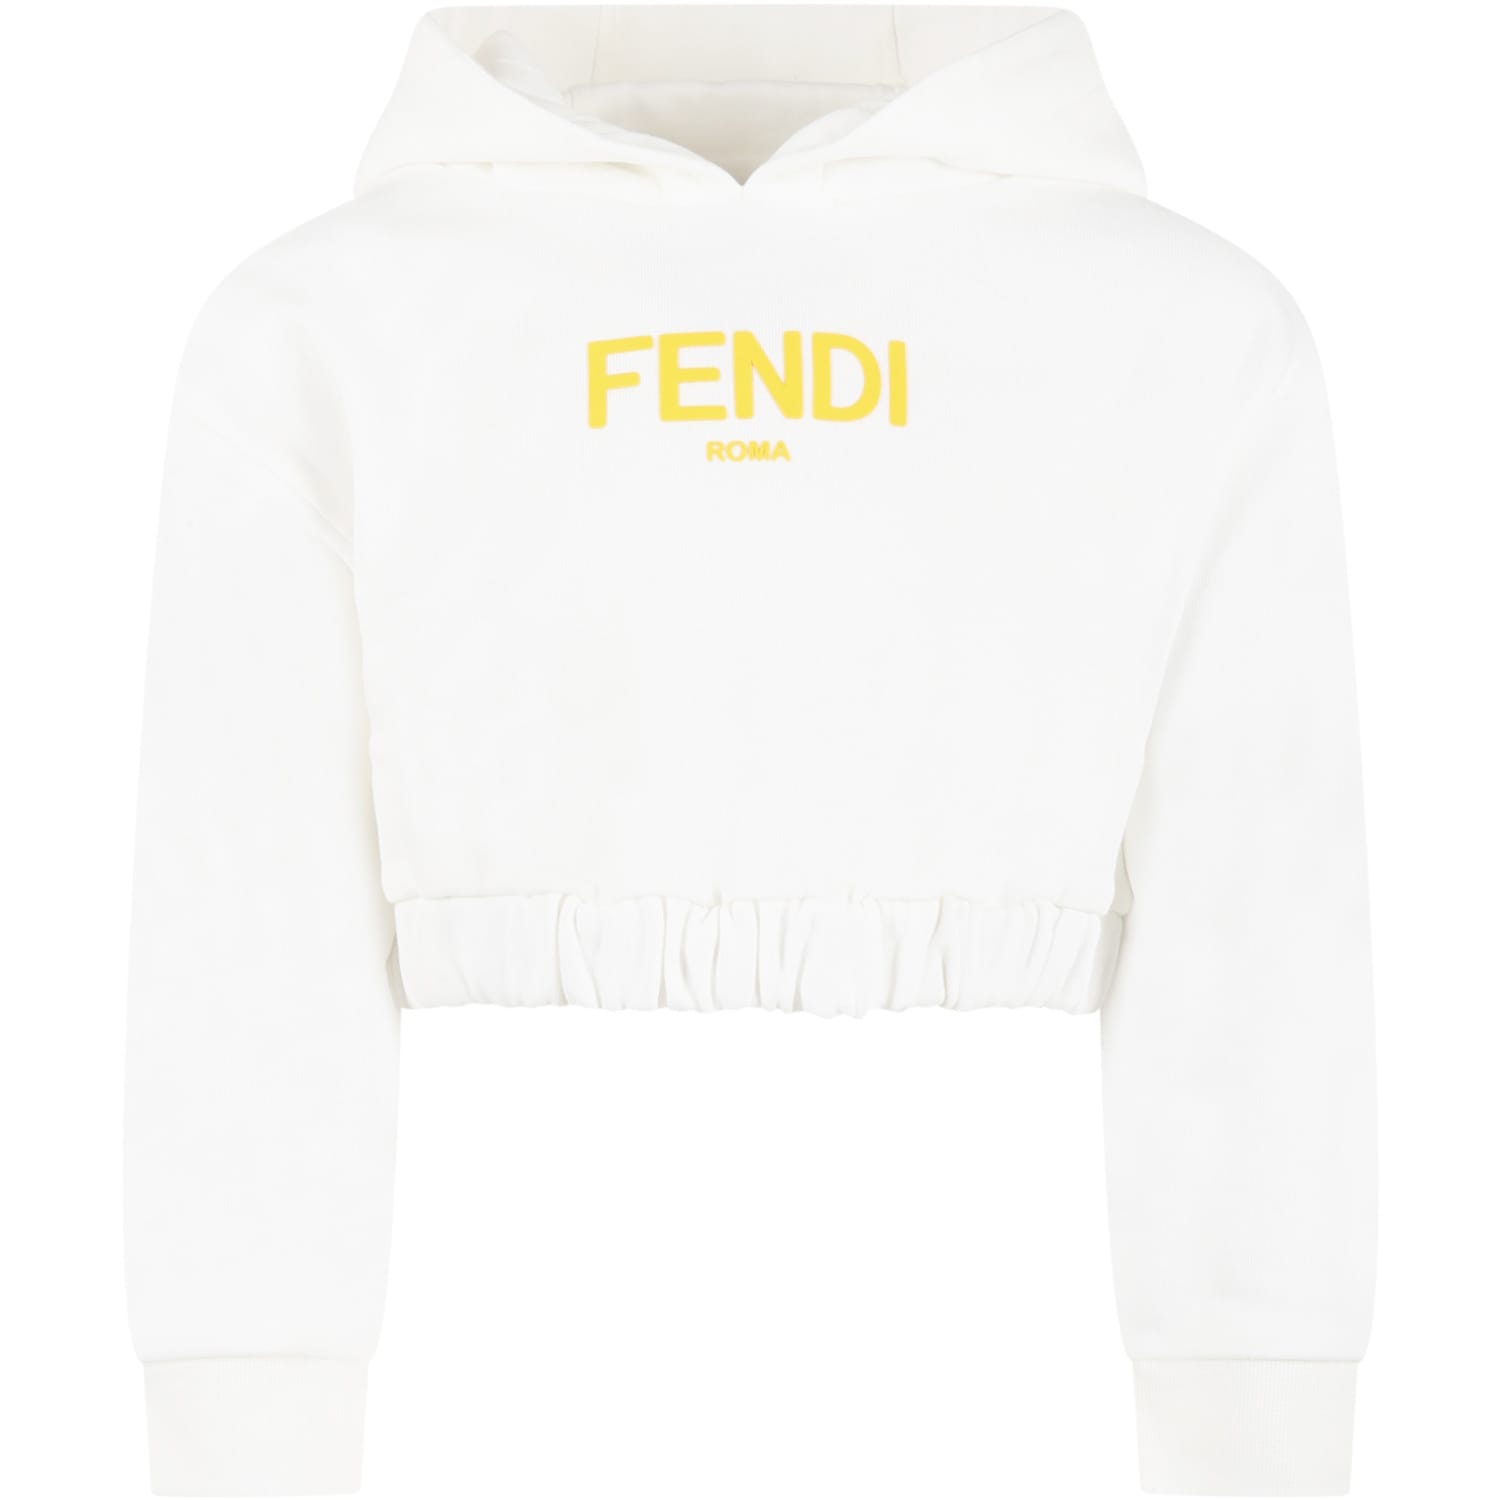 Fendi White Sweatshirt For Girl With Yellow Logo